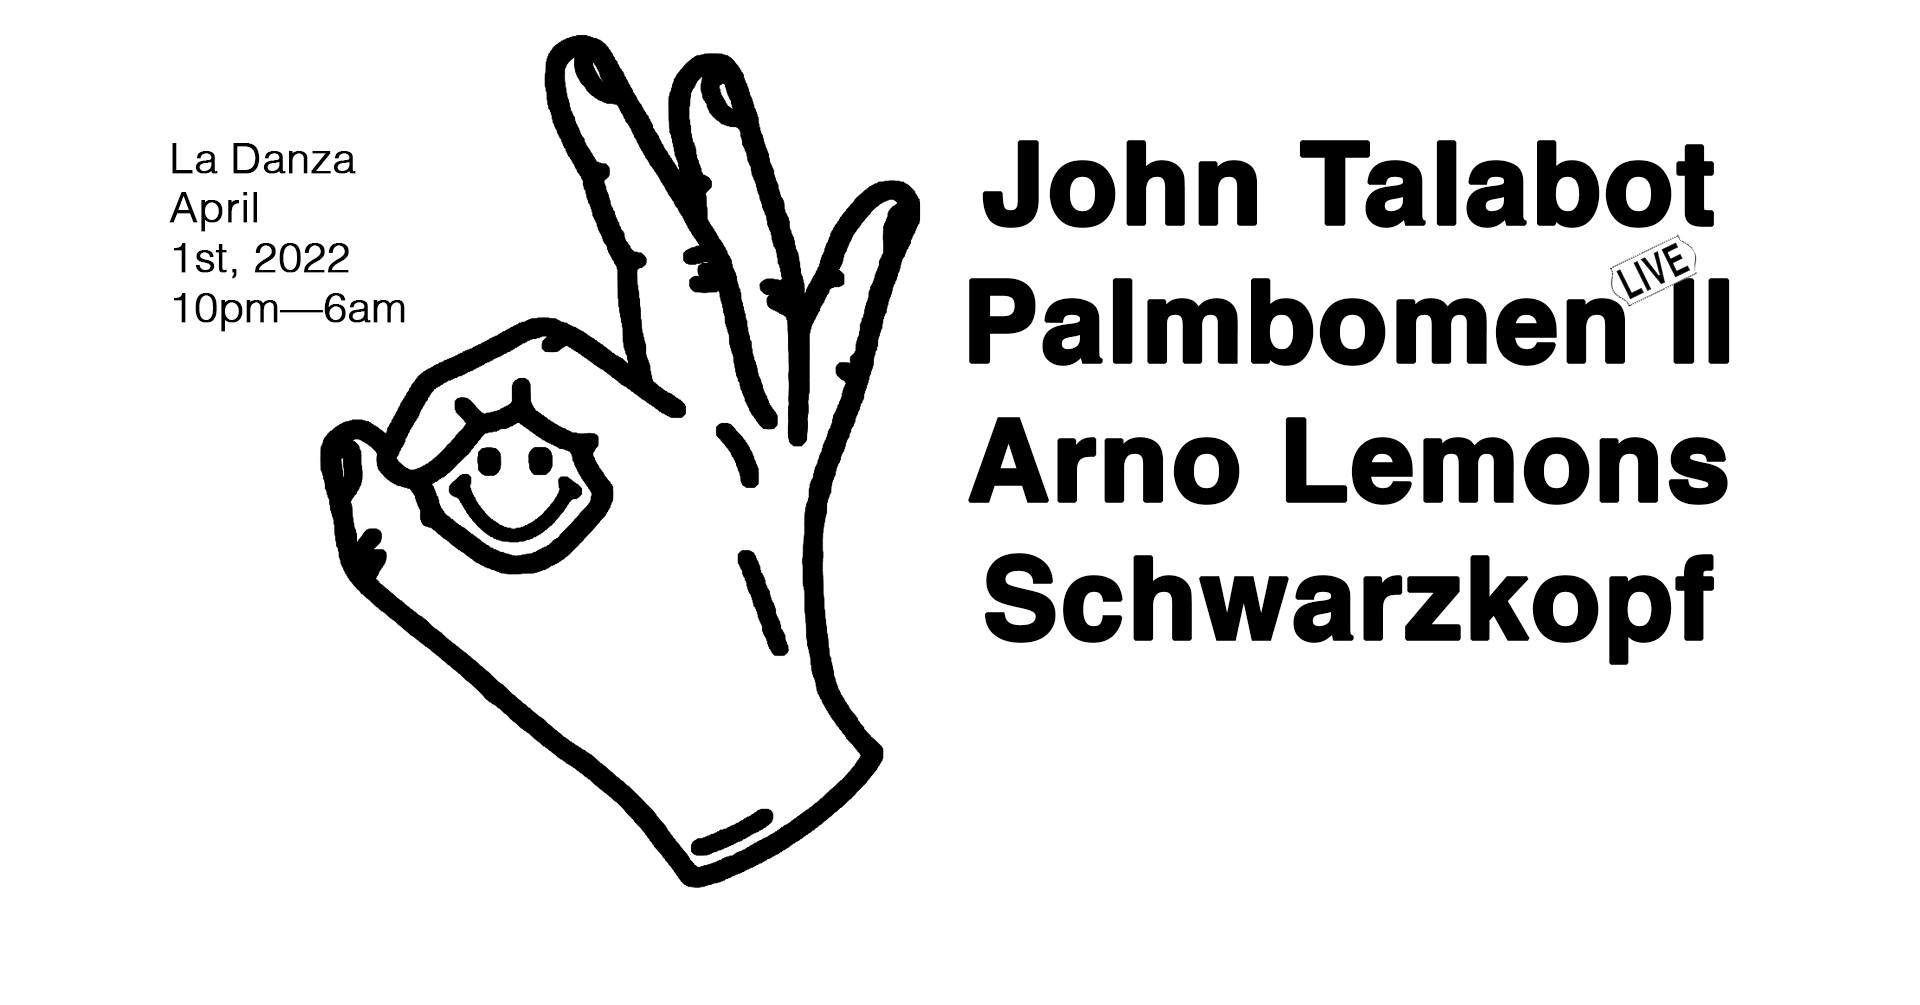 La Danza: John Talabot + Palmbomen II (live) + Arno Lemons + Schwarzkopf - フライヤー表